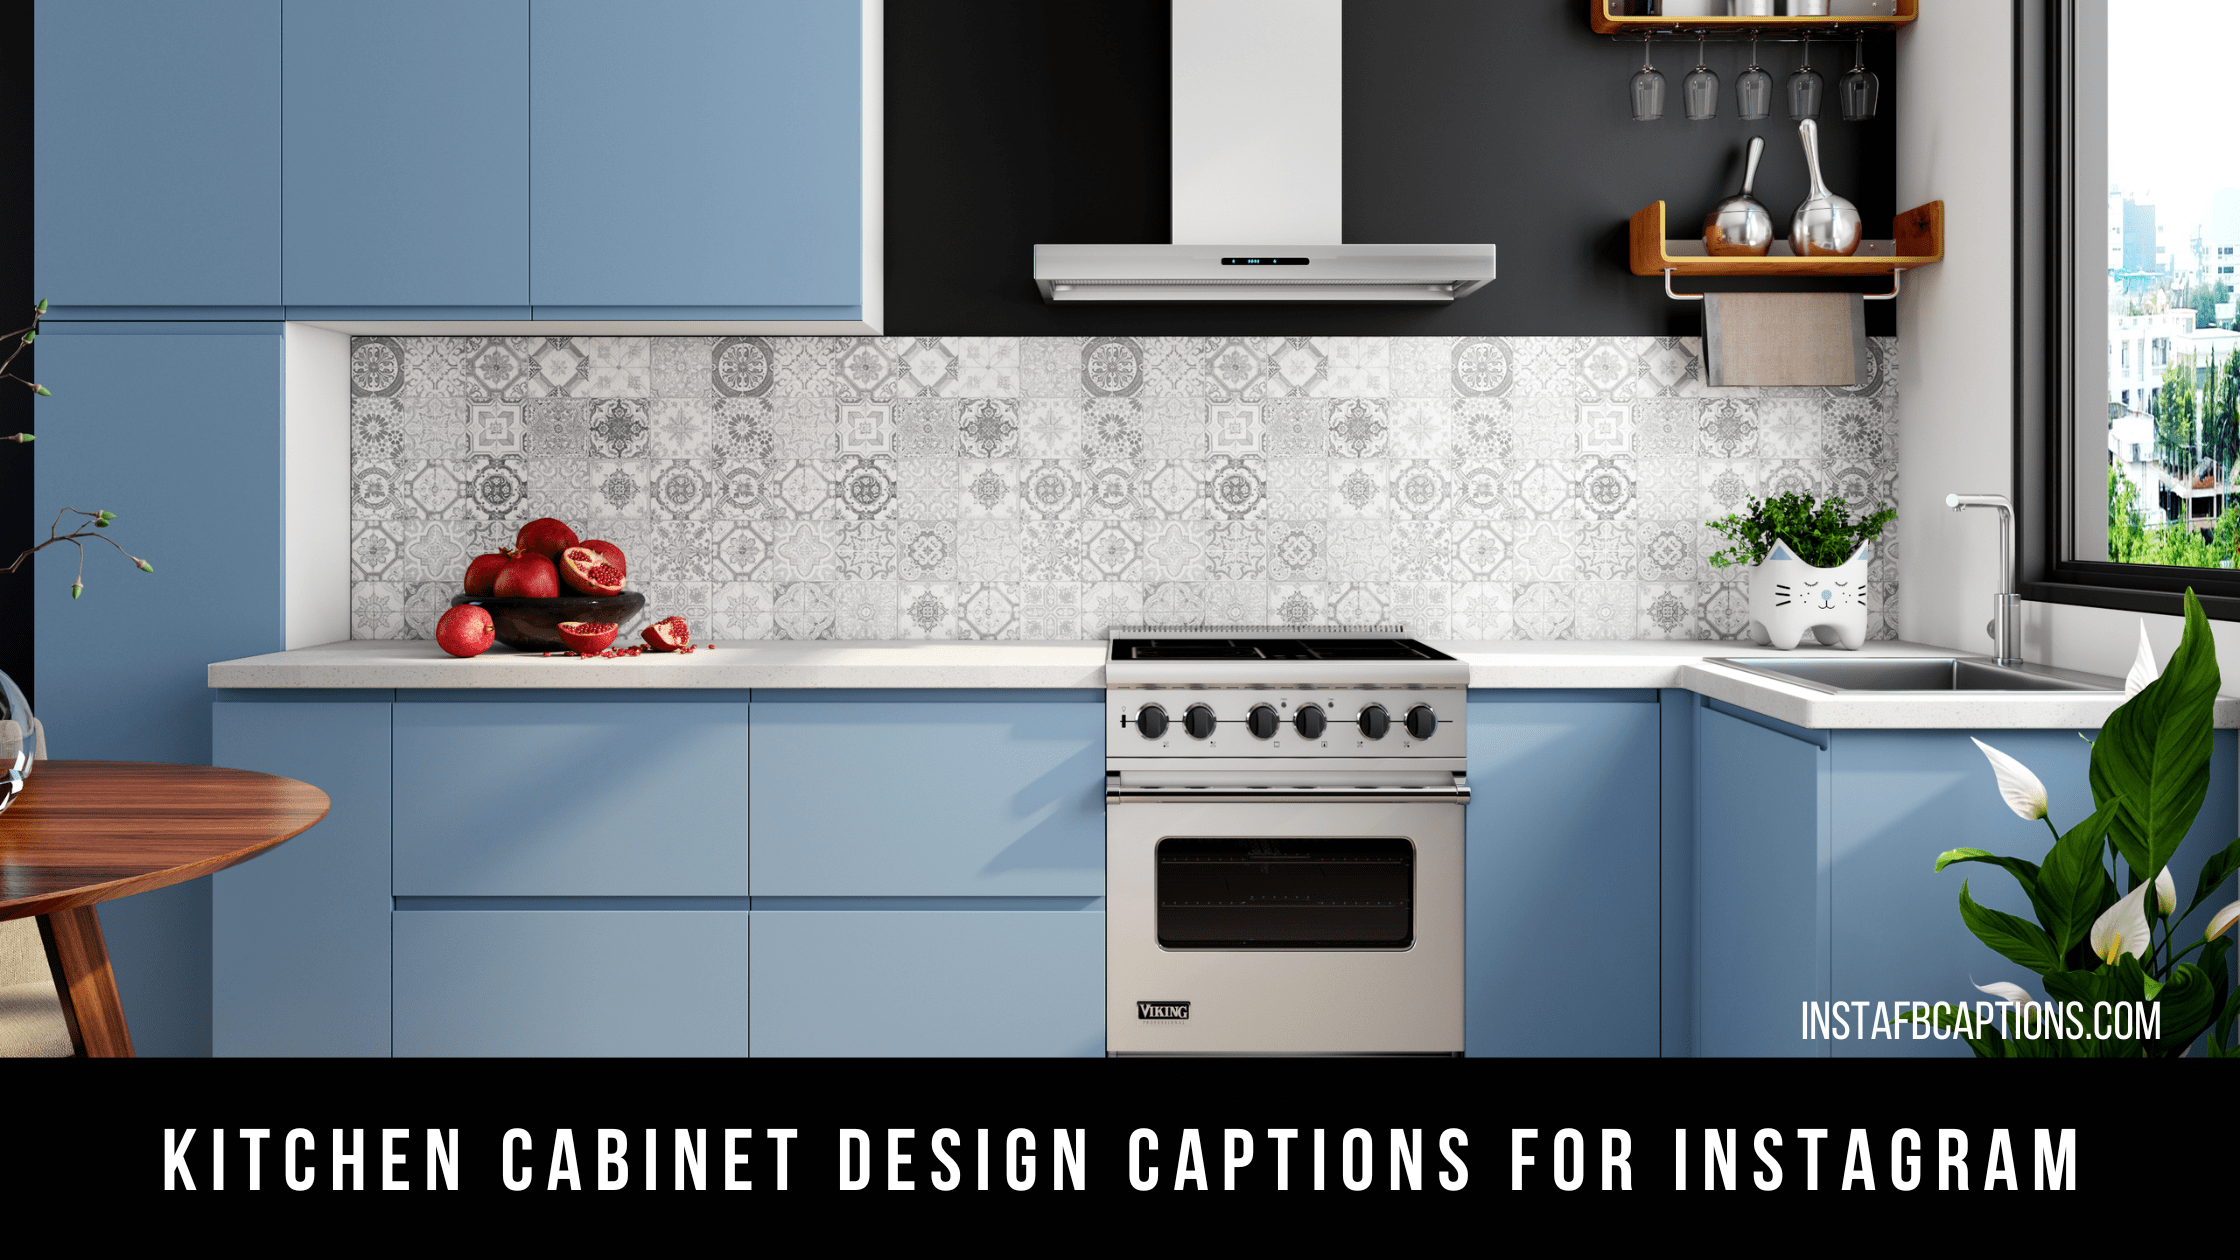 Kitchen Cabinet Design Captions For Instagram  - Kitchen Cabinet Design Captions for Instagram - Kitchen Cabinet Design Captions for Instagram in 2023